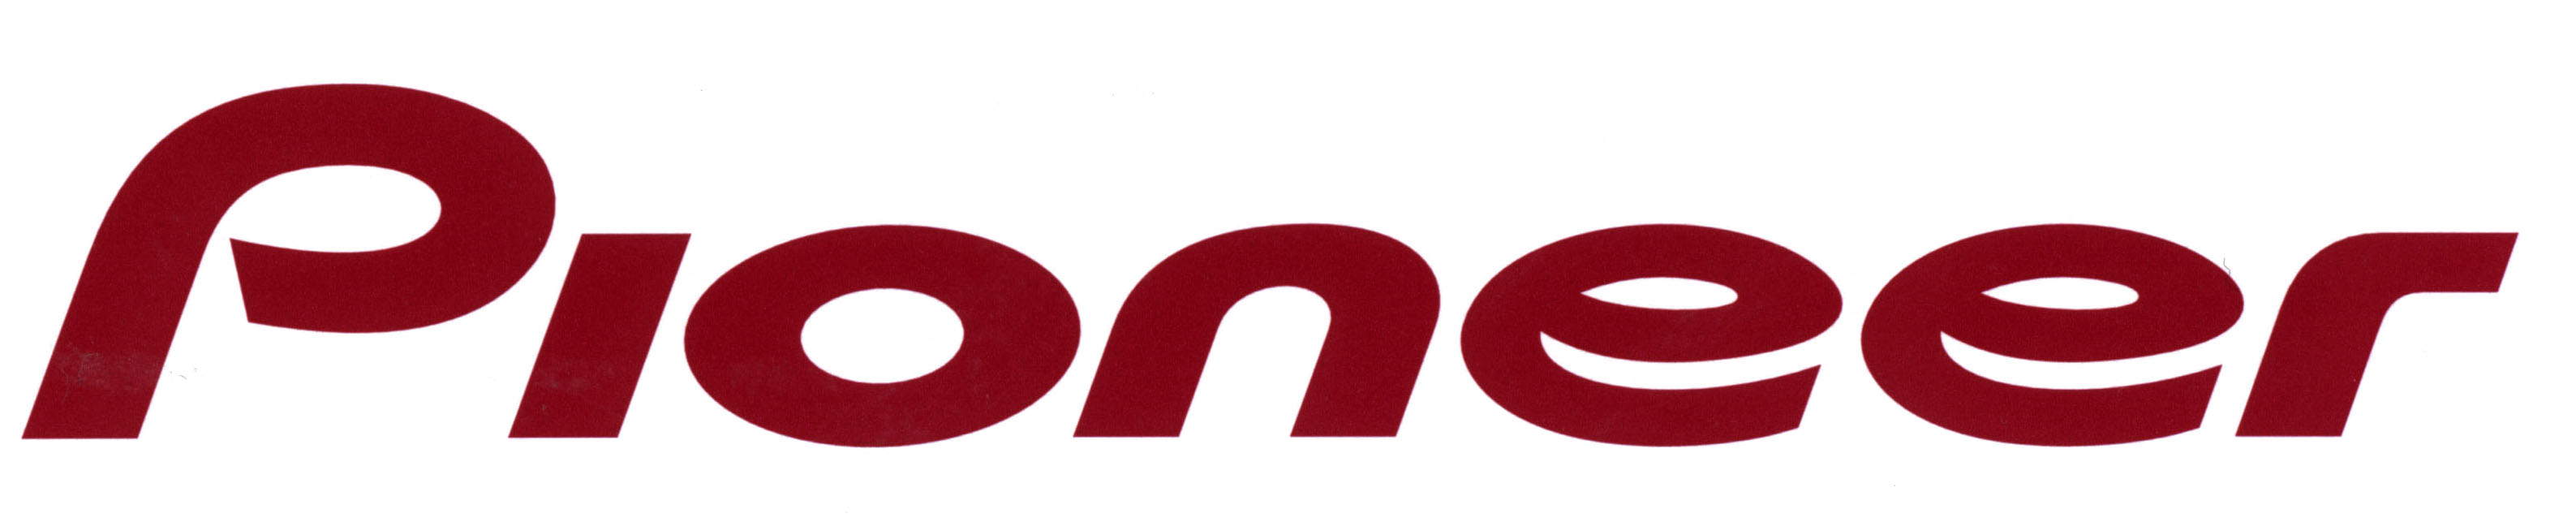 http://wesleytech.com/wp-content/uploads/2008/03/pioneer-logo1.jpg